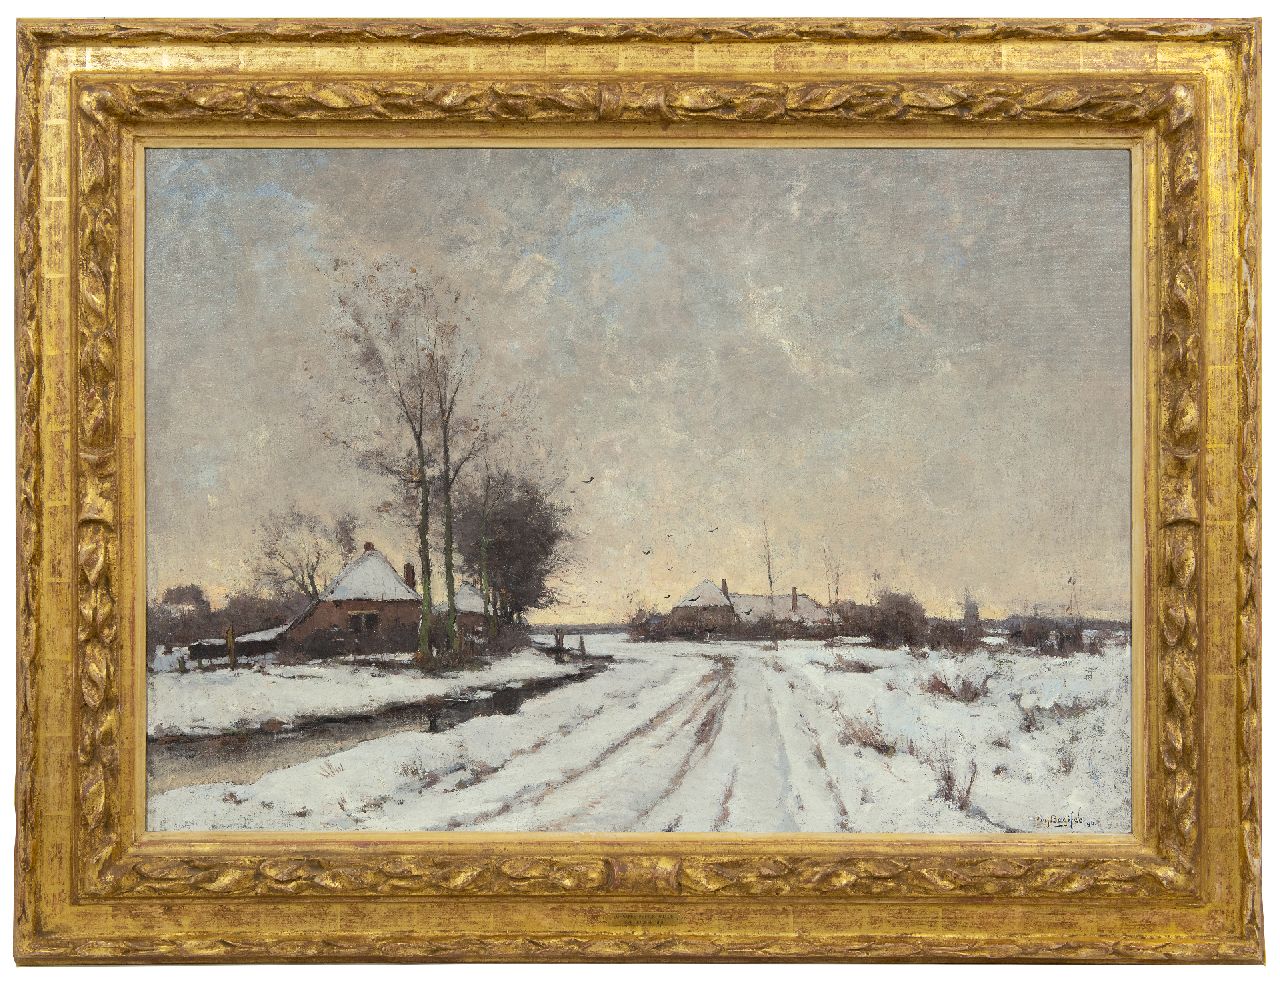 Bodifée J.P.P.  | Johannes Petrus Paulus 'Paul' Bodifée, A winter landscape, Overijssel, oil on canvas 70.3 x 100.0 cm, signed l.r. and dated '96